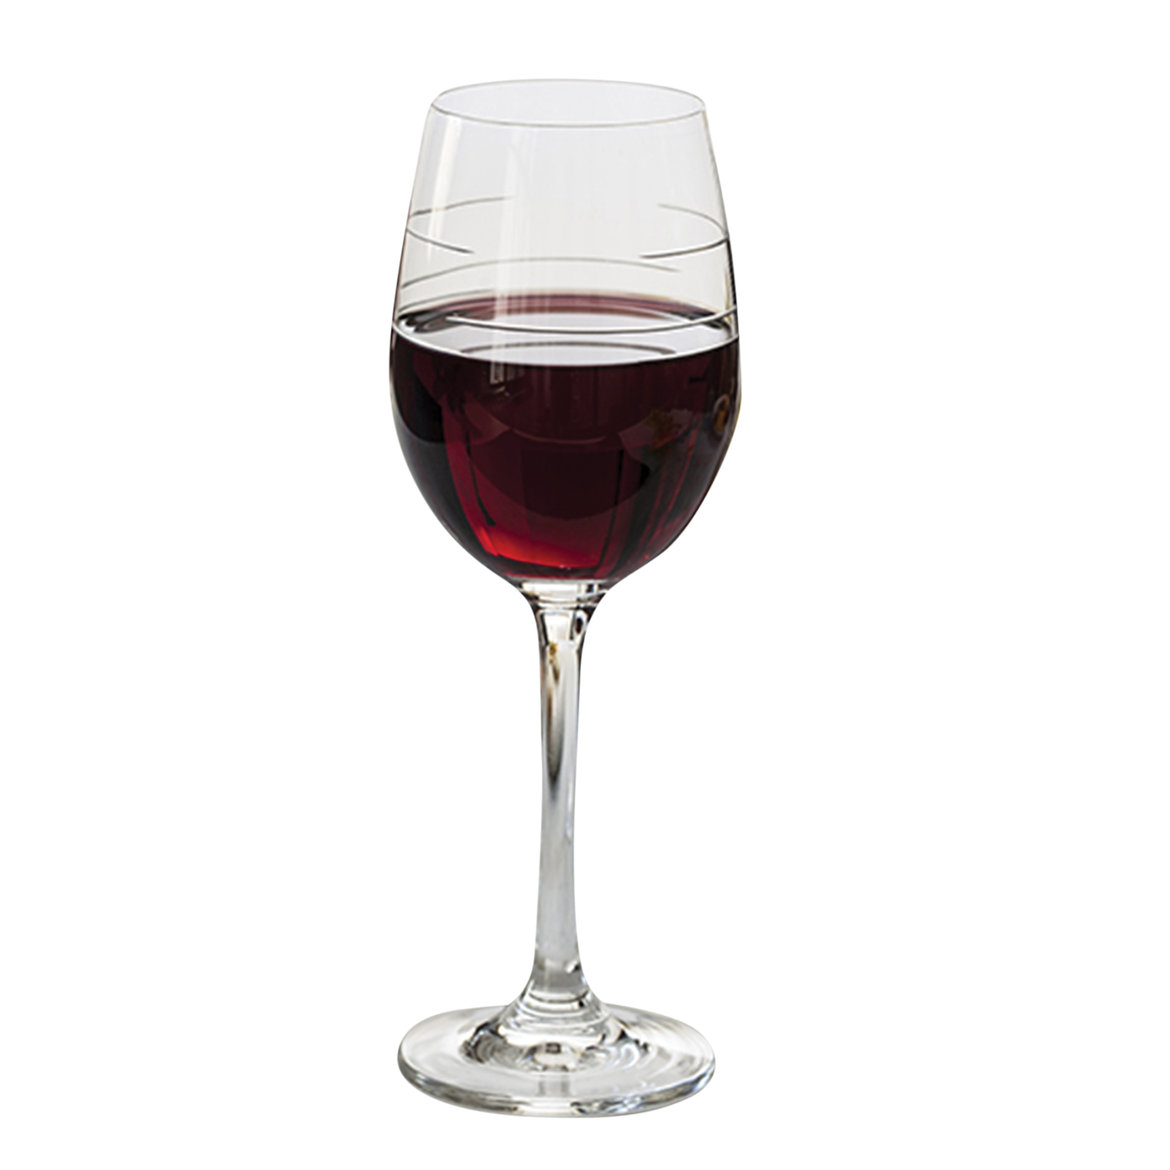 portion control wine glass